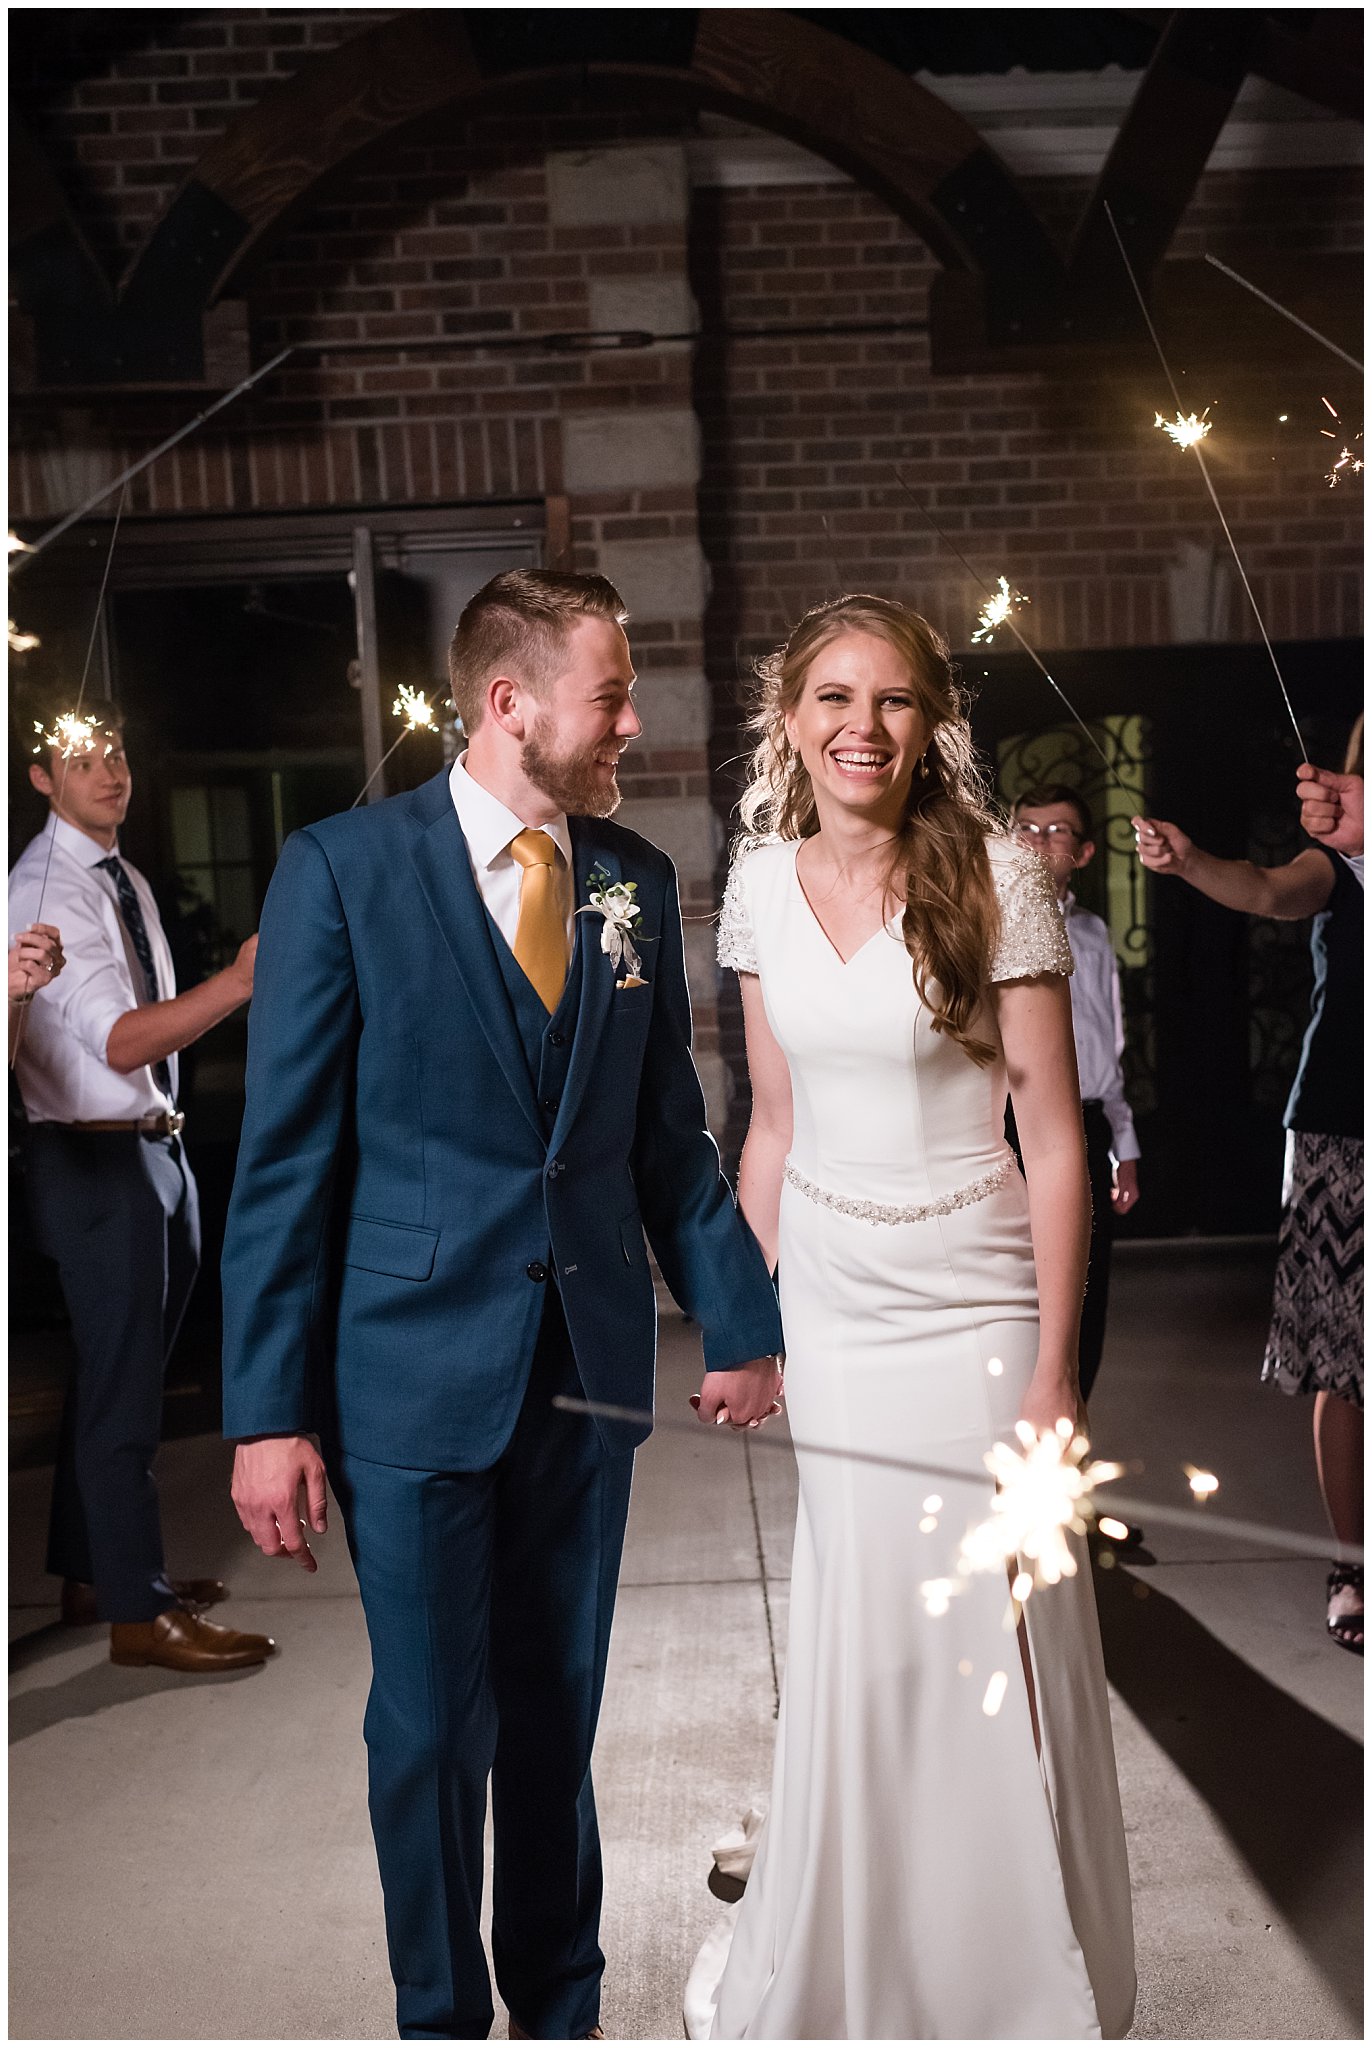 Sparkler Exit at Talia Event Center | Bride and groom walking